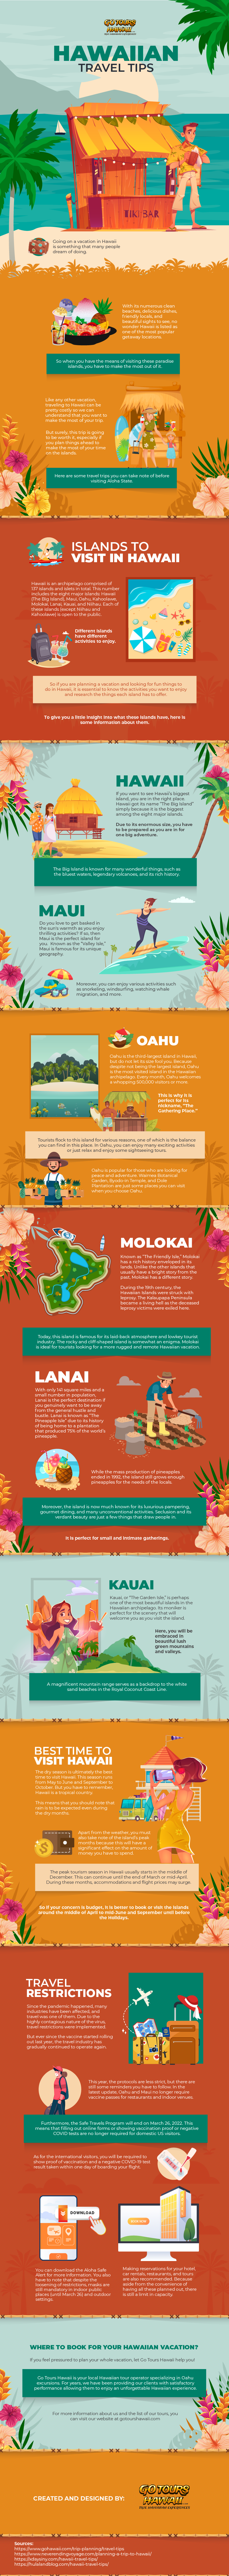 Hawaiian Travel Tips - Infographic ImageKIDW251